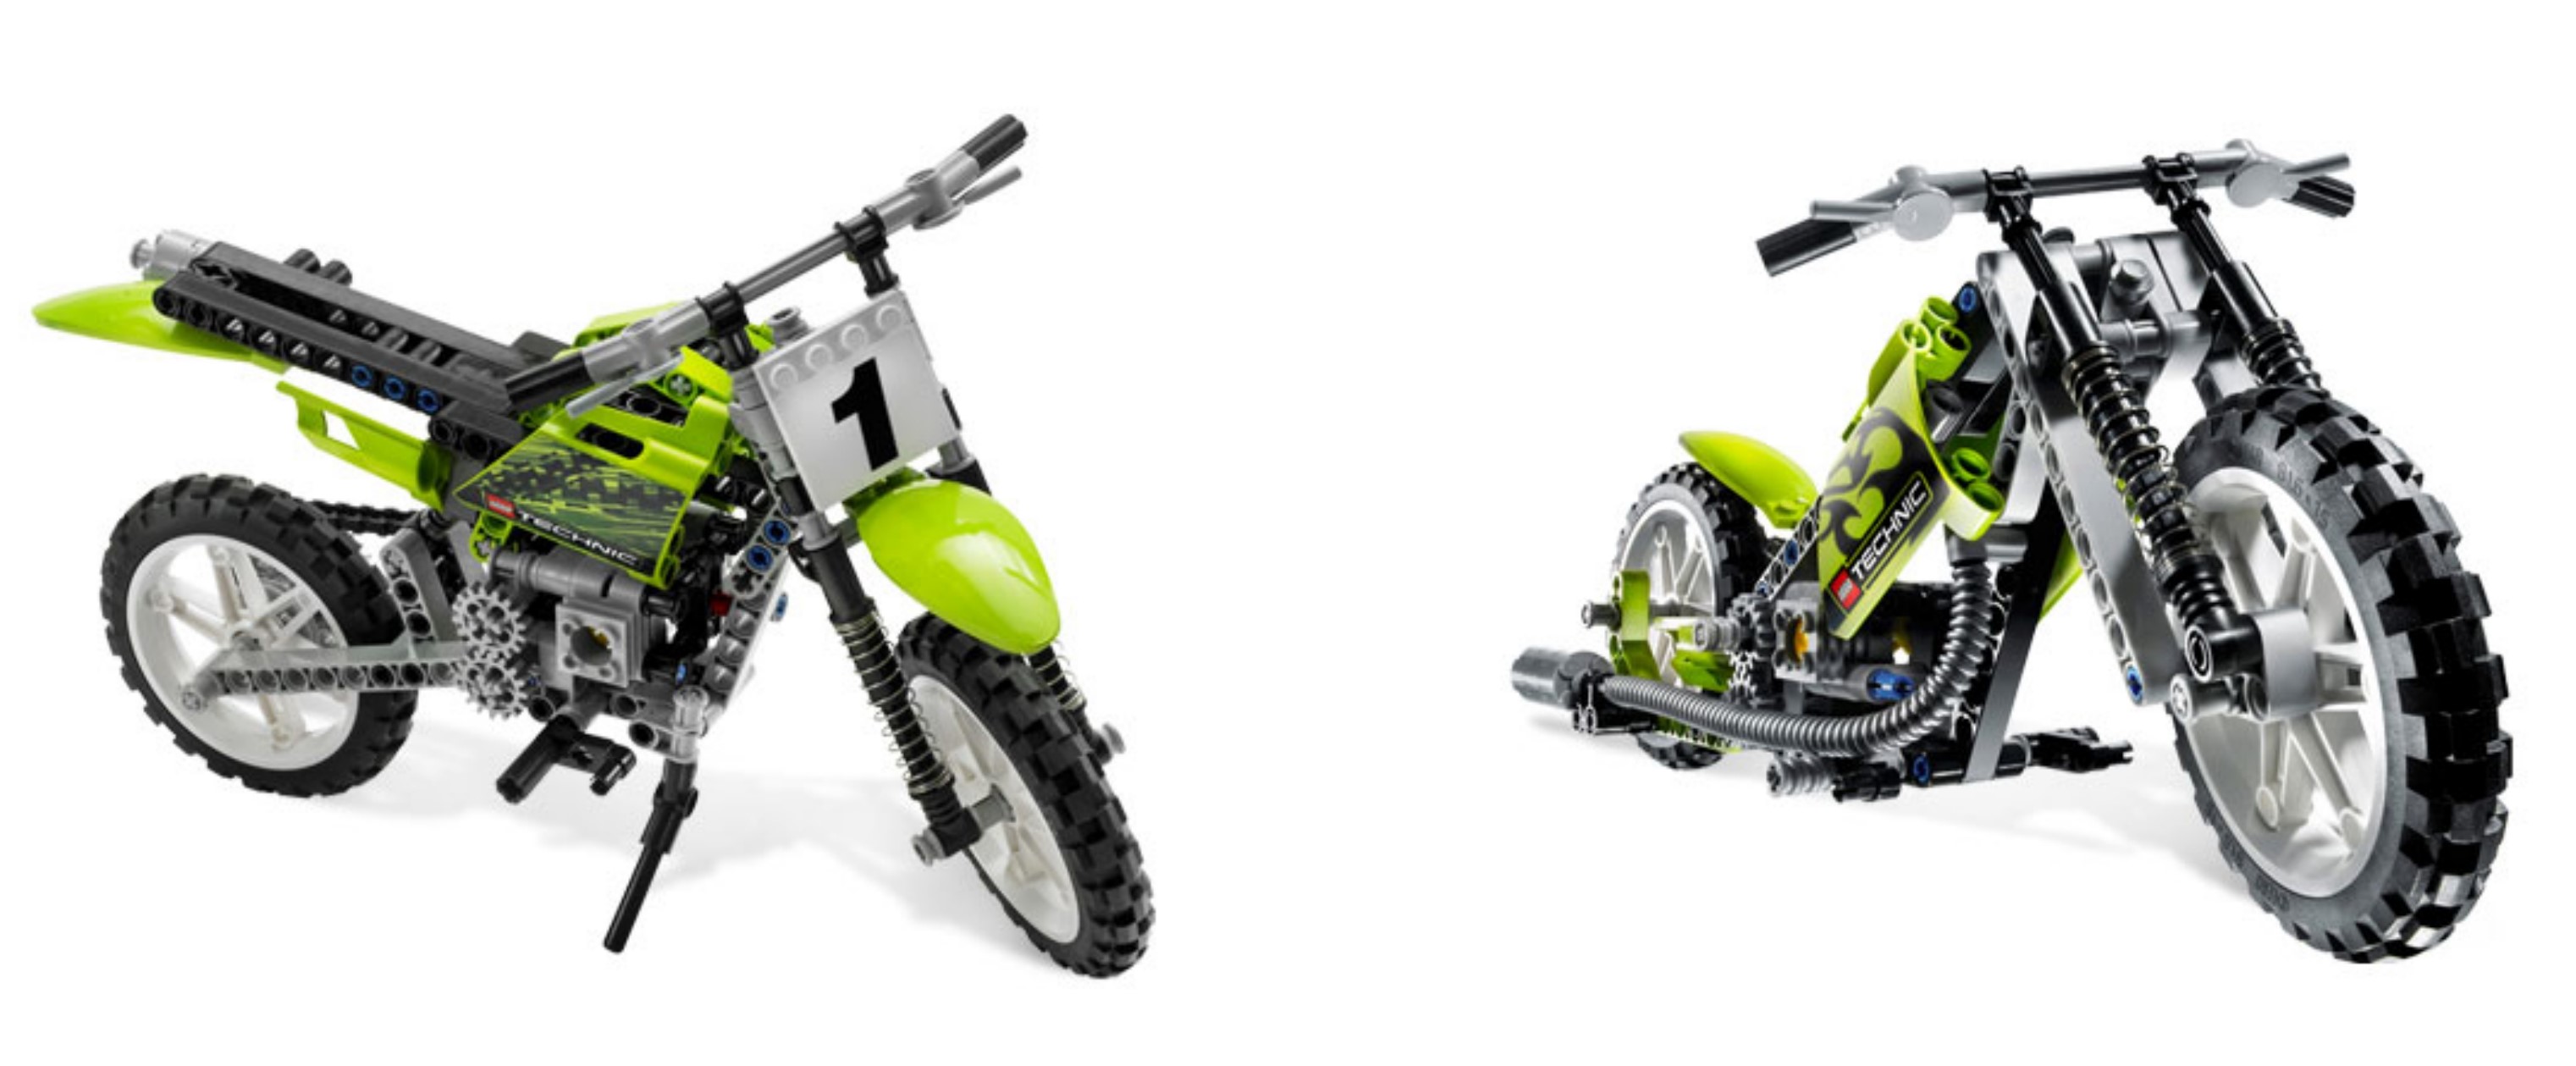 My Lego Technic Motorbike set  Lego technic, Lego, Motorbikes